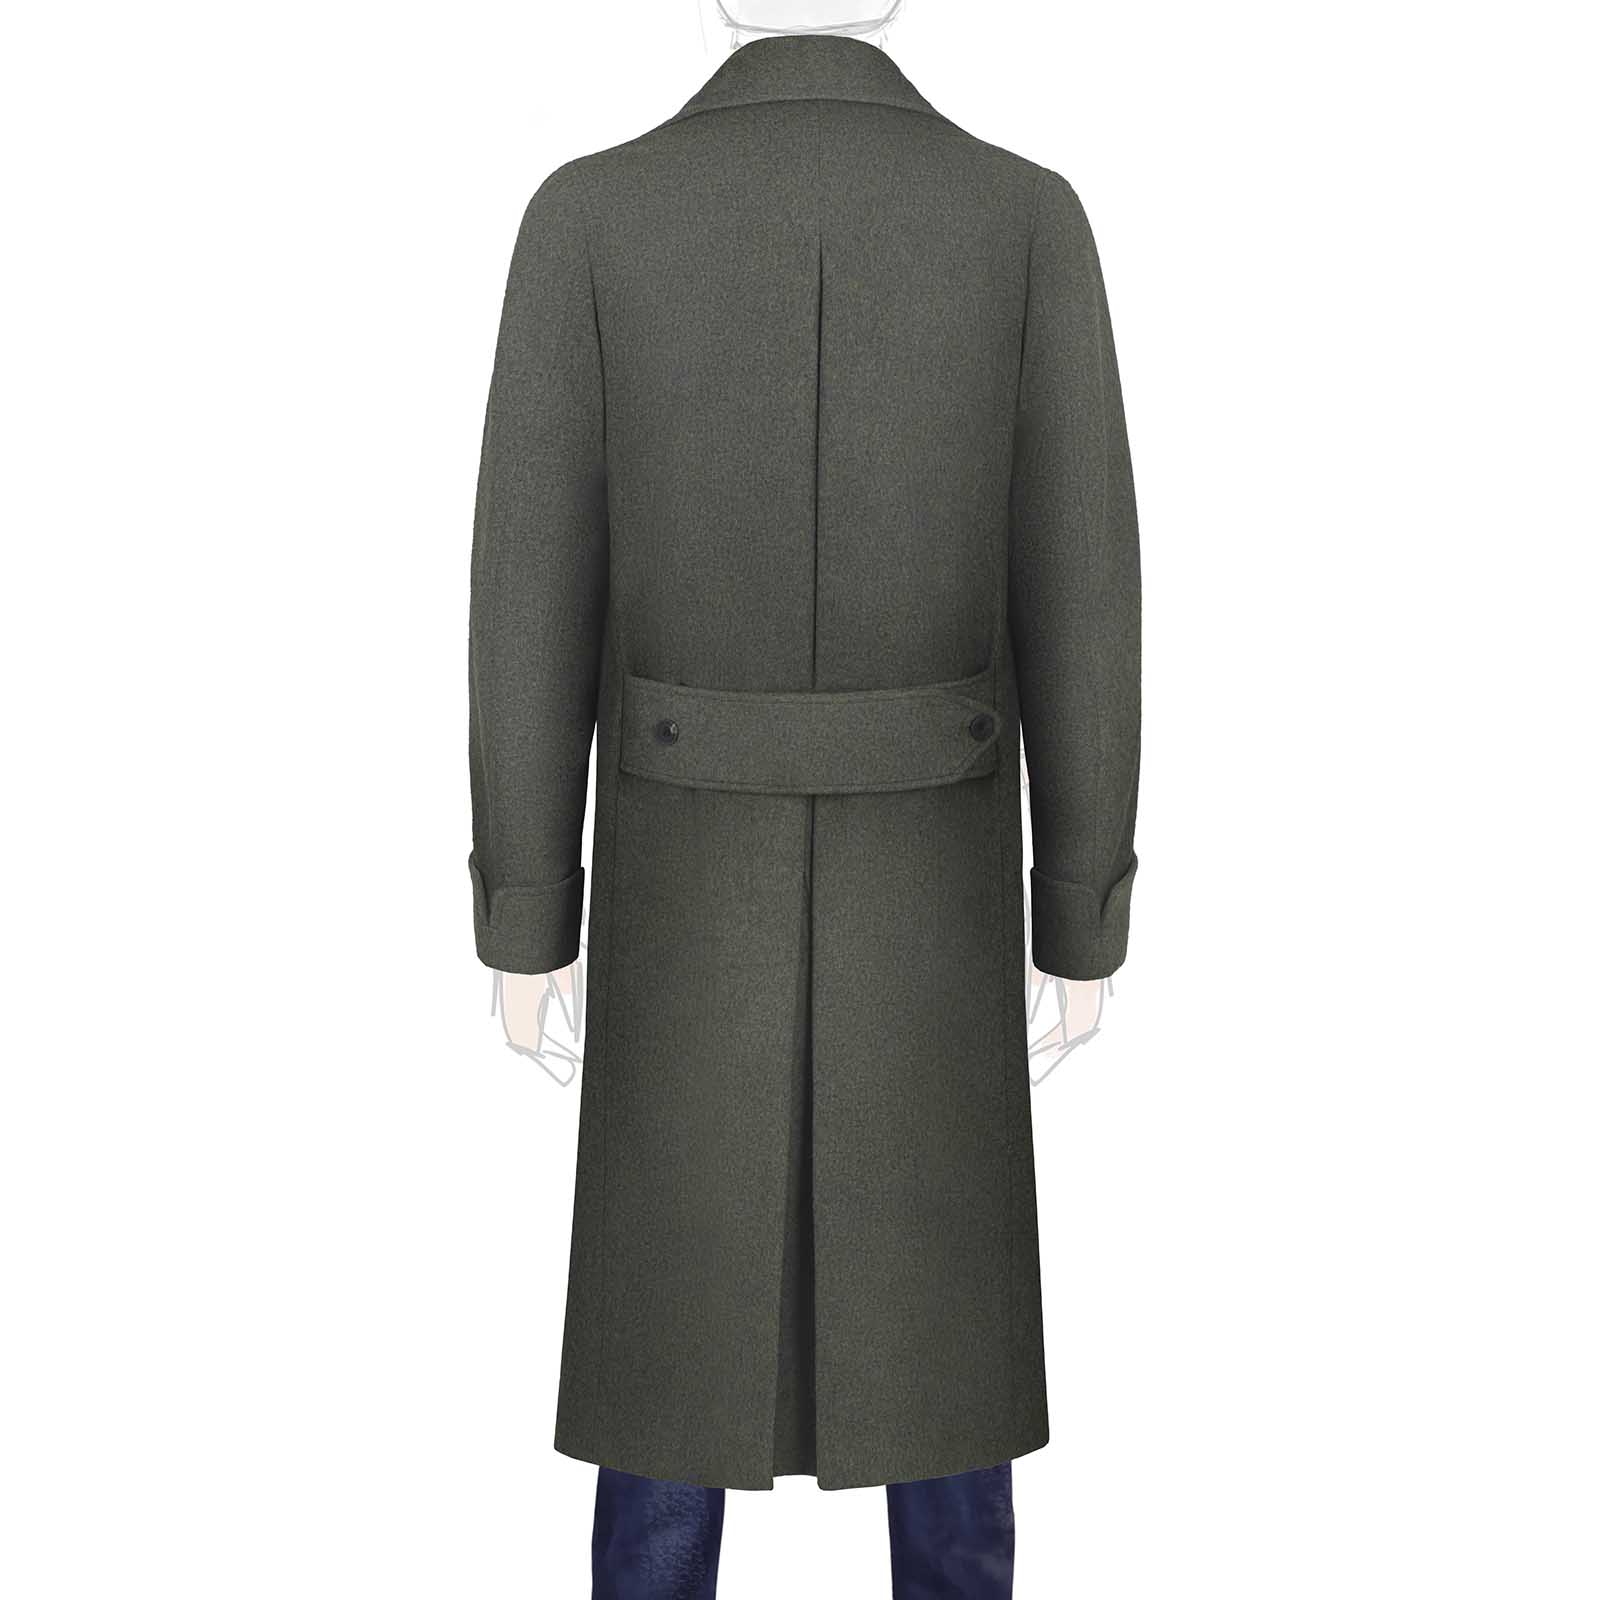 Mariano Rubinacci - Green cashmere ulster coat